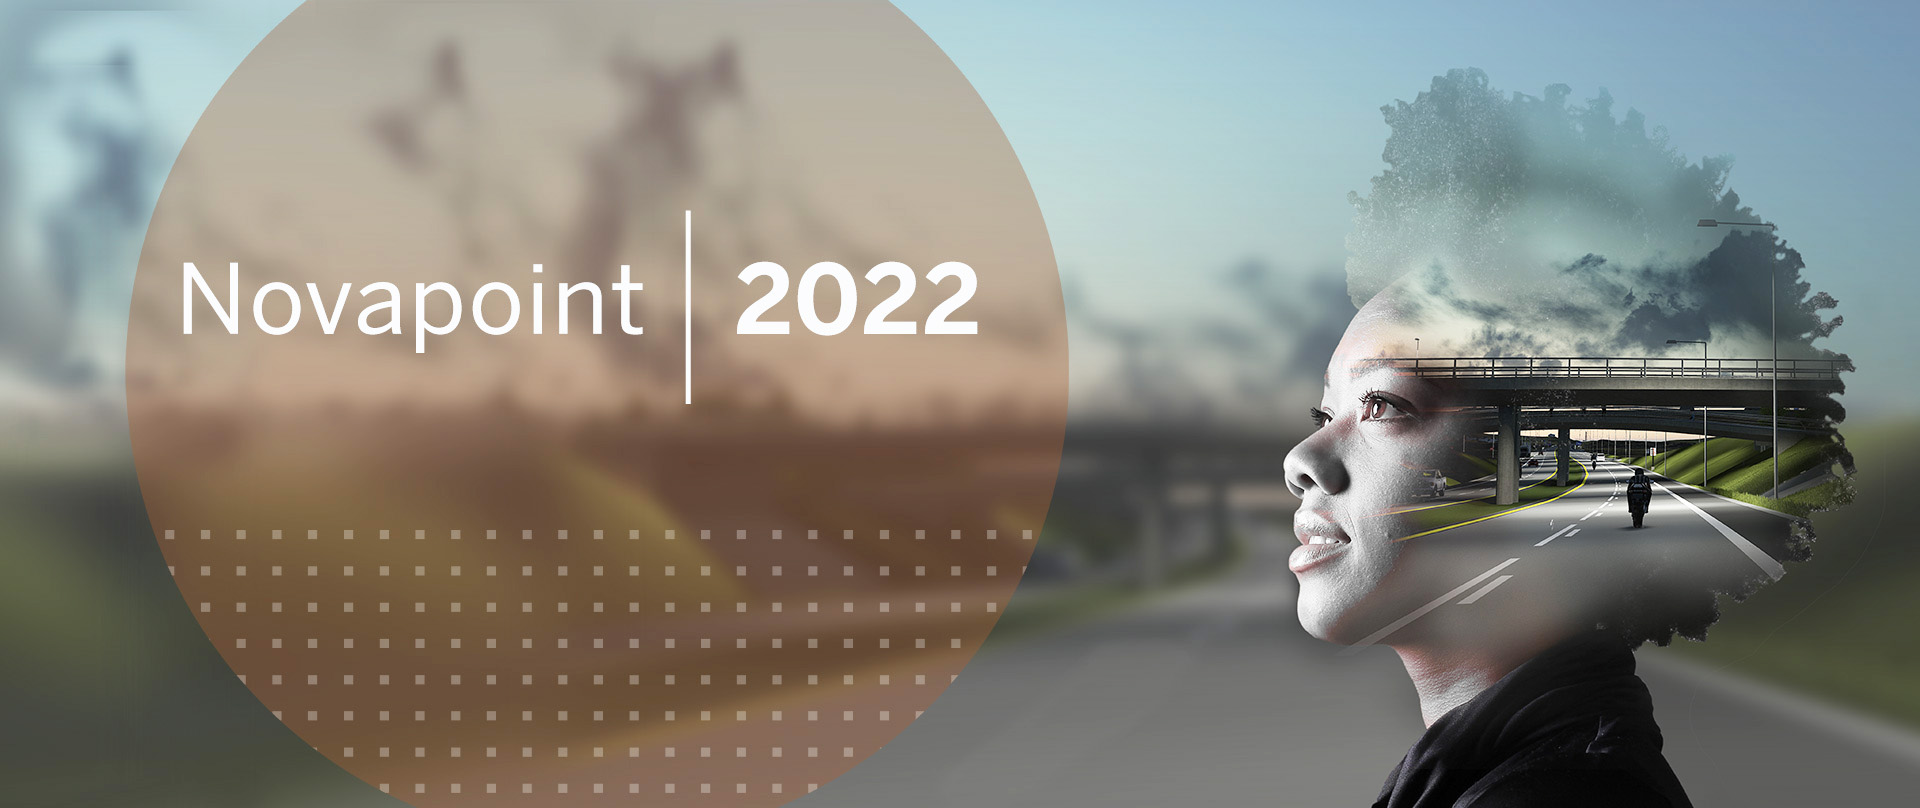 Novapoint 2022